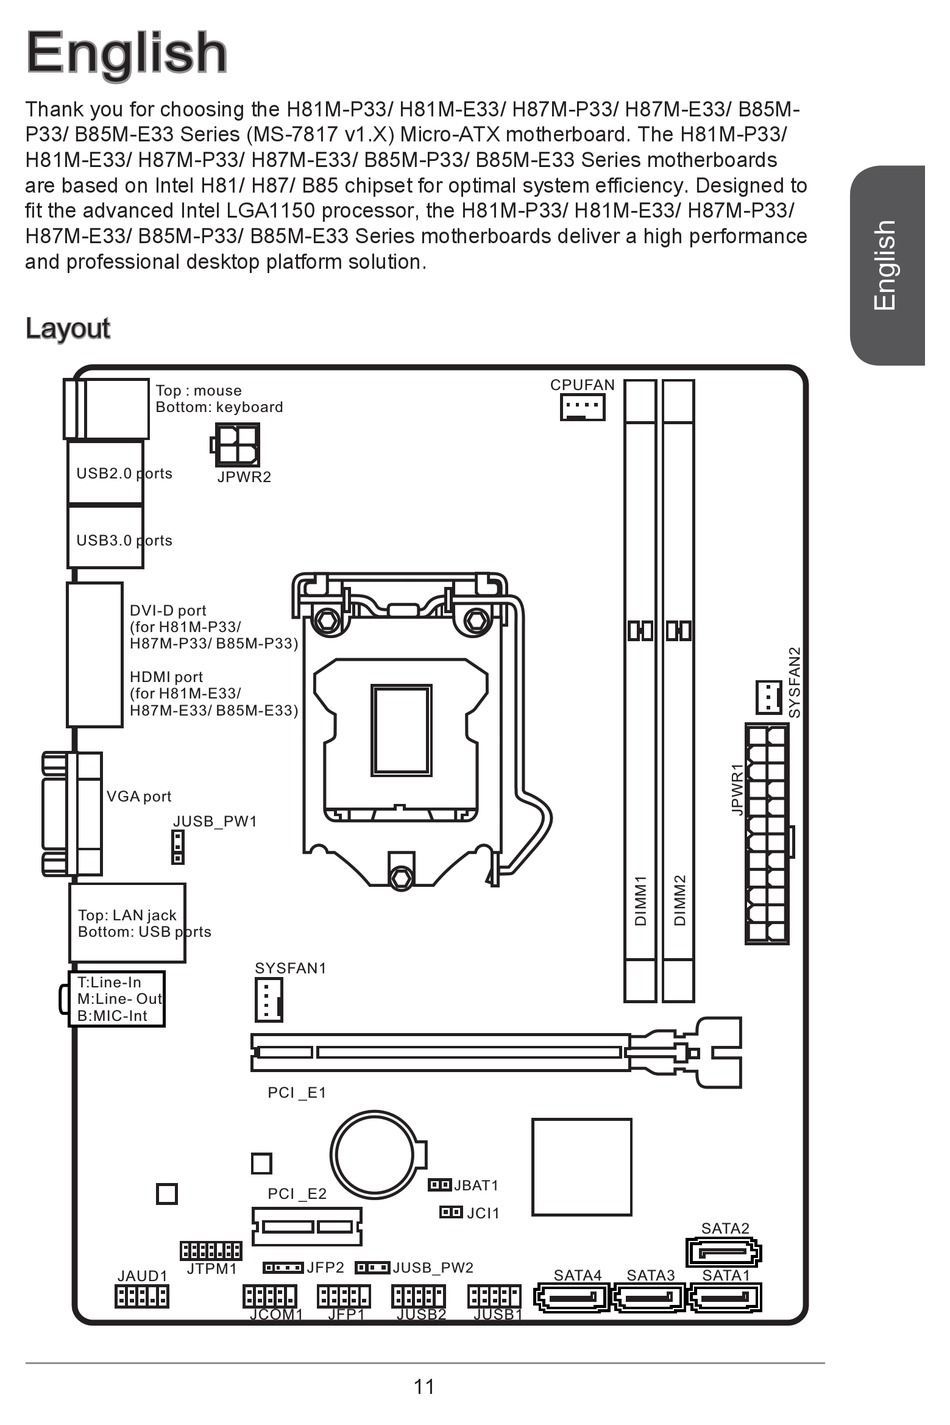 GS15031 motherboard spec details